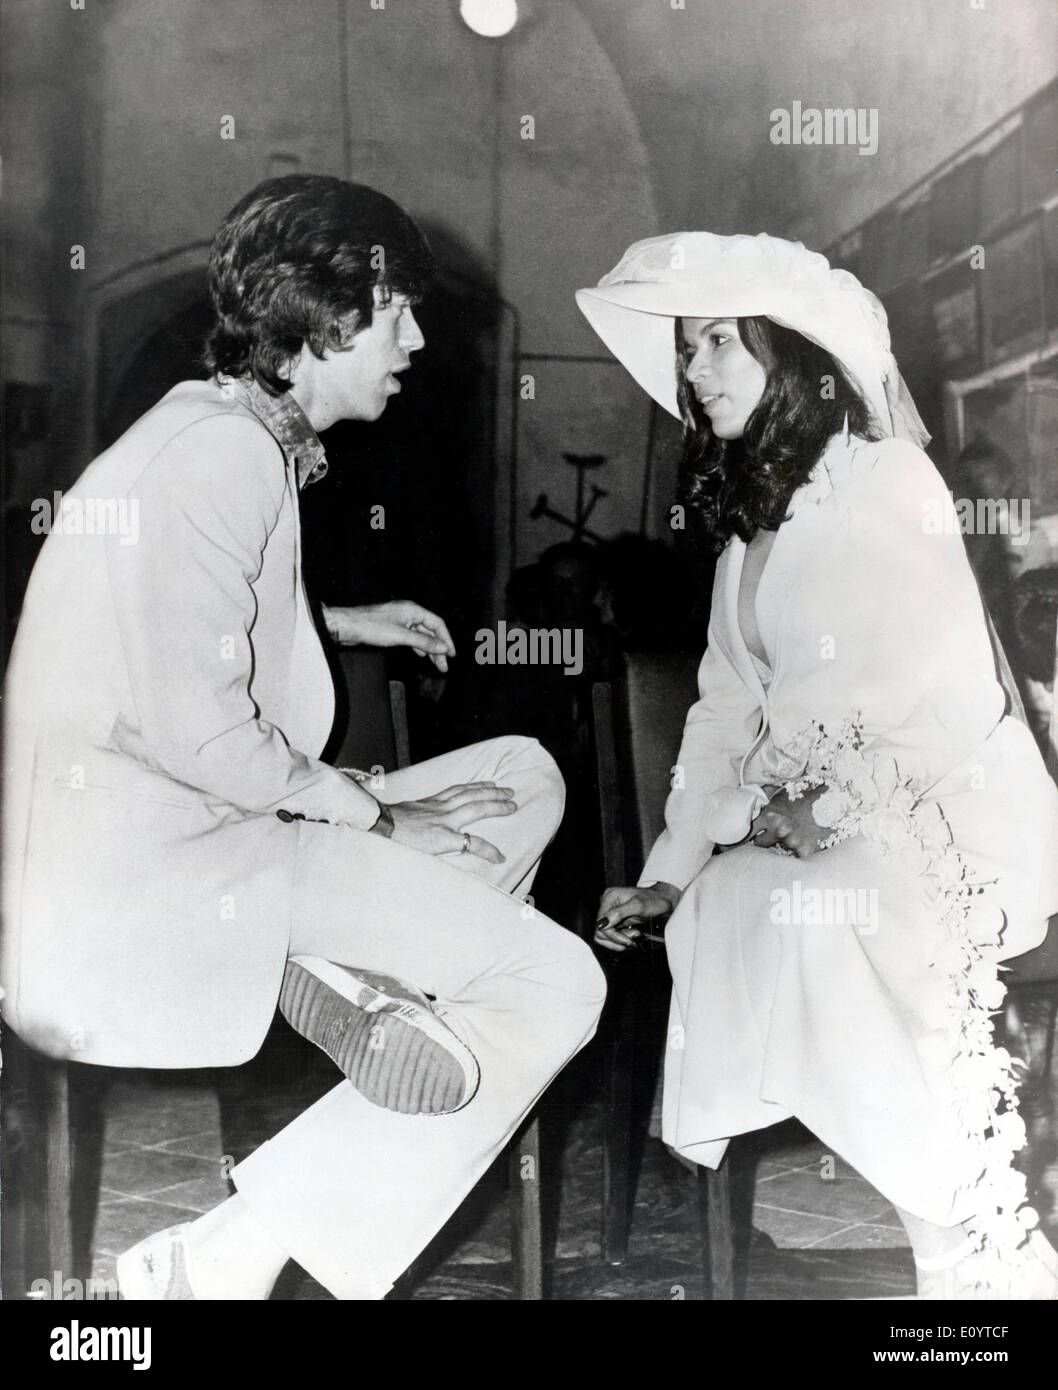 Singer Mick Jagger épouse Bianca Jagger Banque D'Images